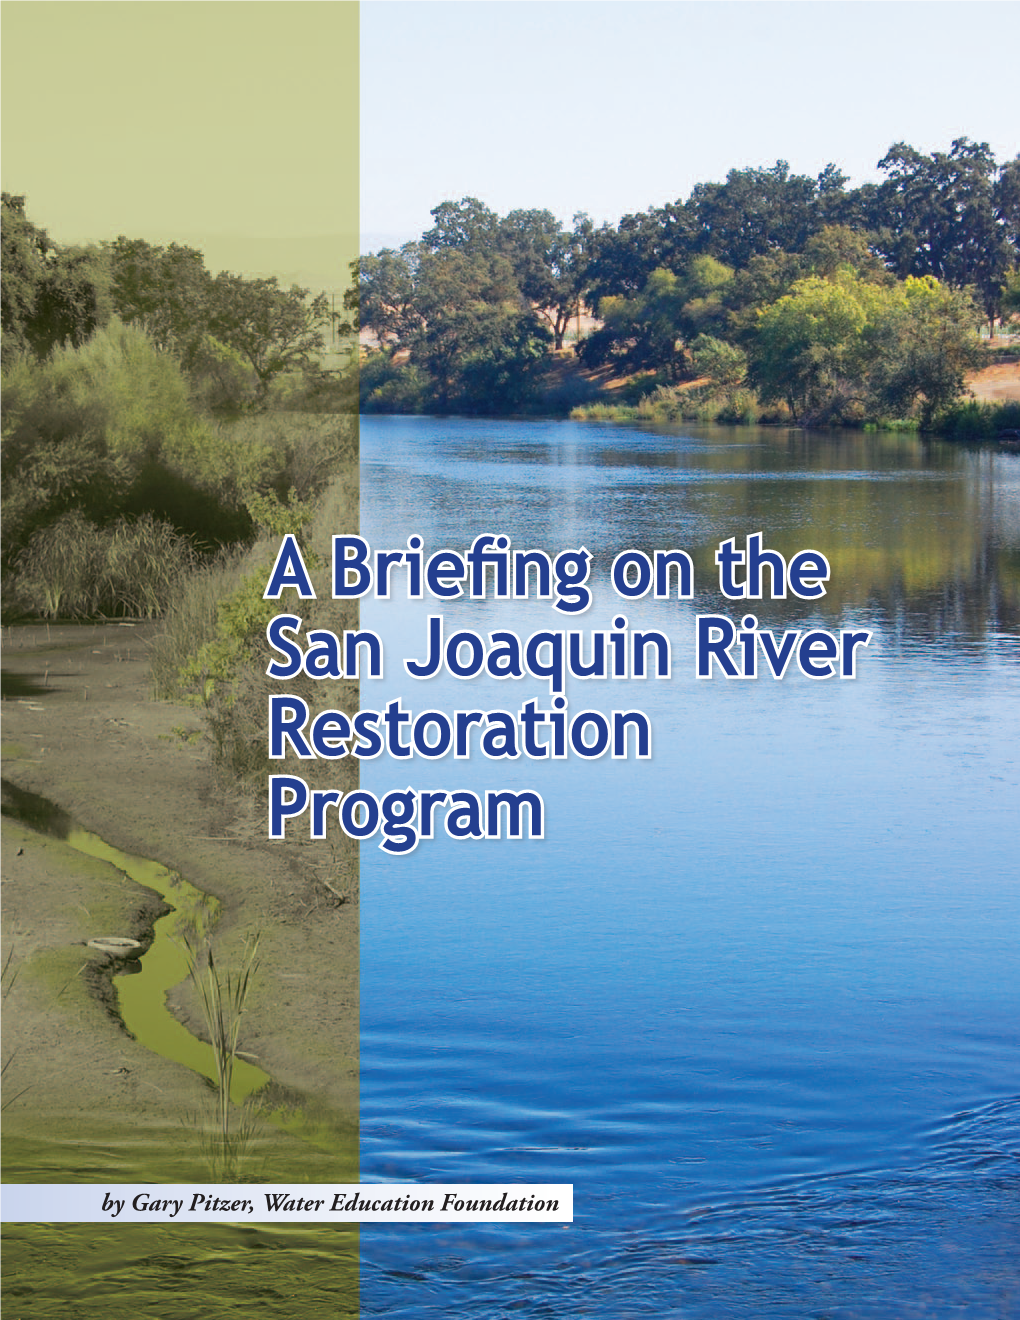 A Briefing on the San Joaquin River Restoration Program